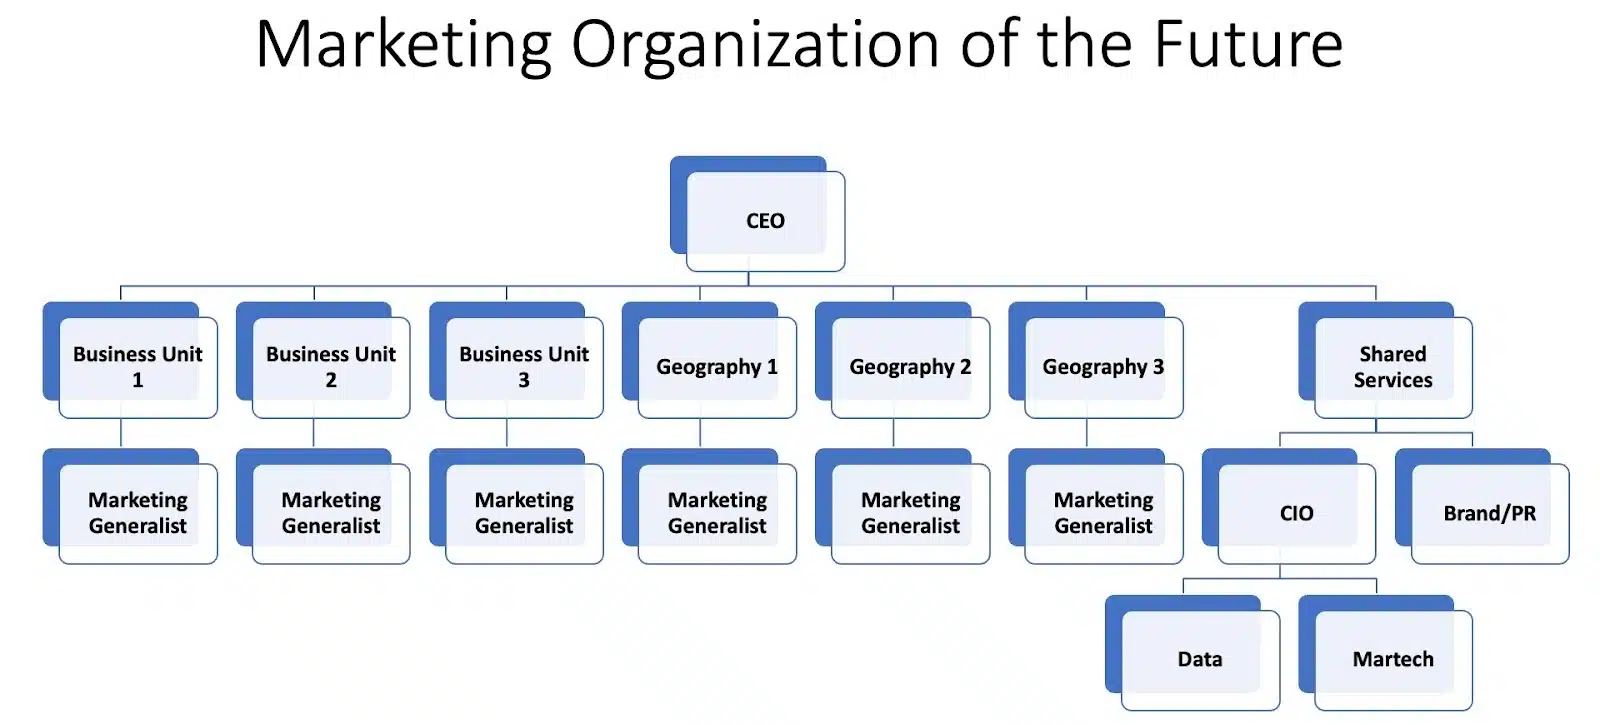 Marketing organization of the future